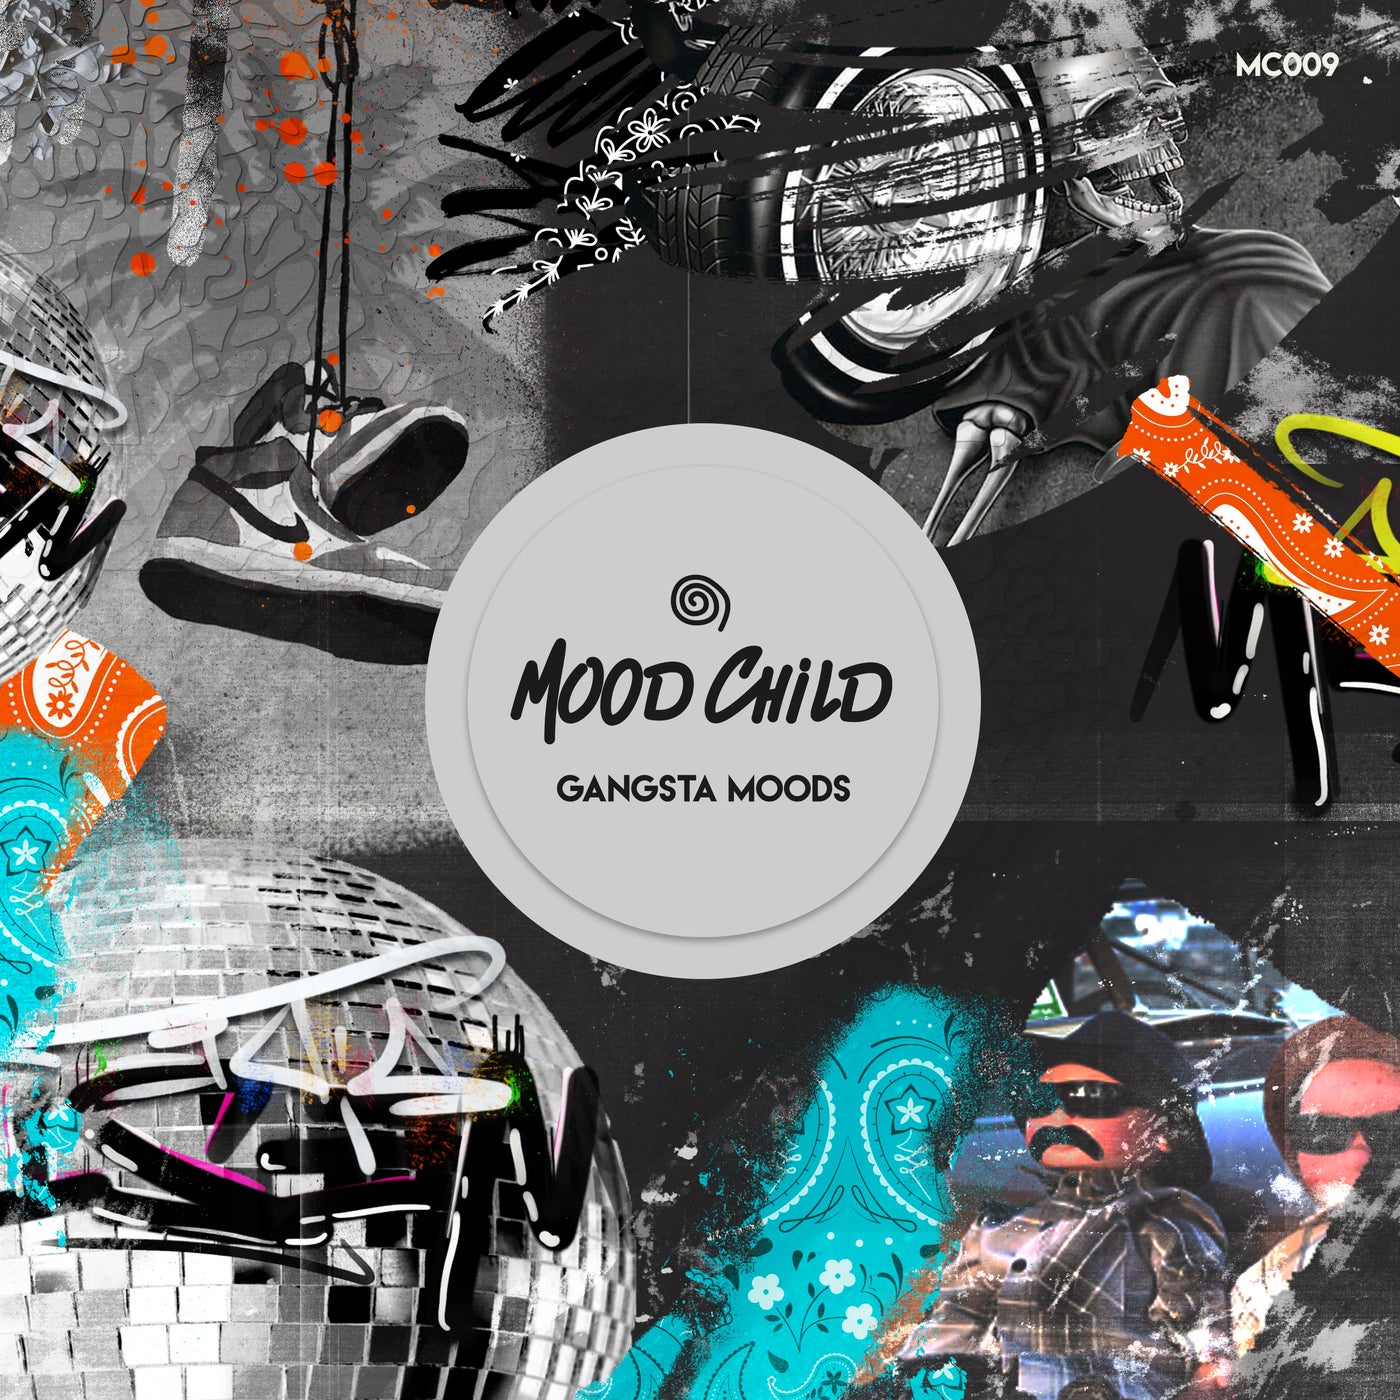 image cover: VA - Gangsta Moods on Mood Child